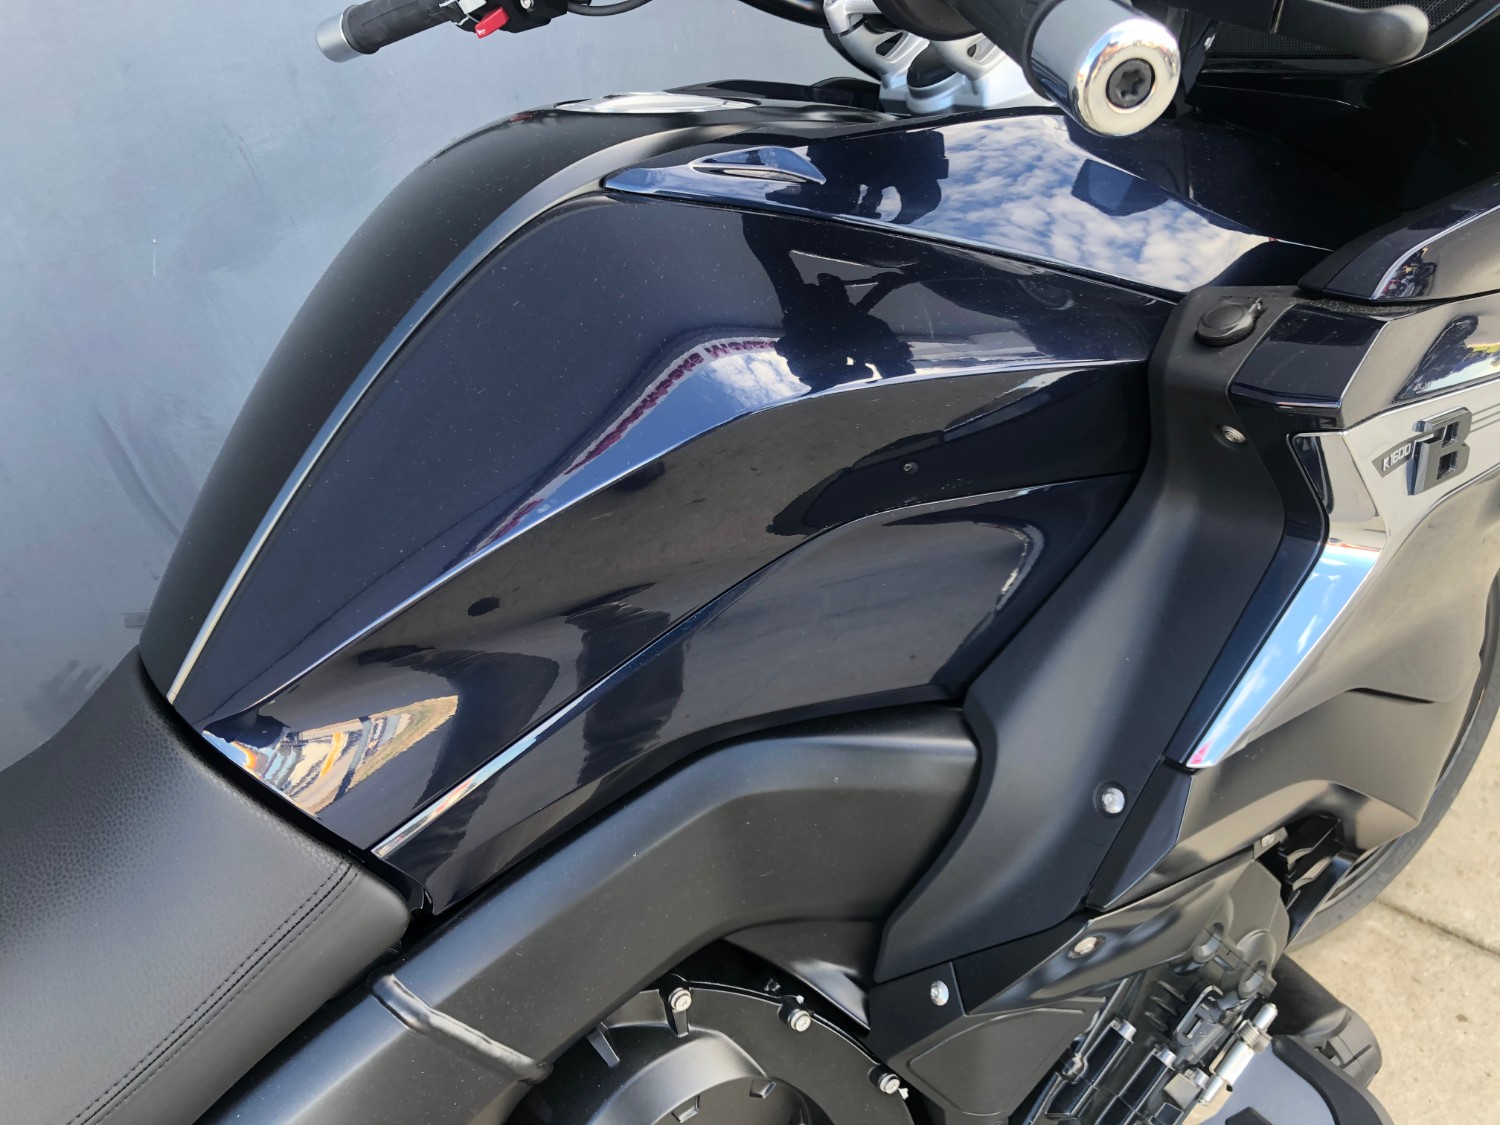 2019 BMW K1600 B Deluxe Motorcycle Image 23